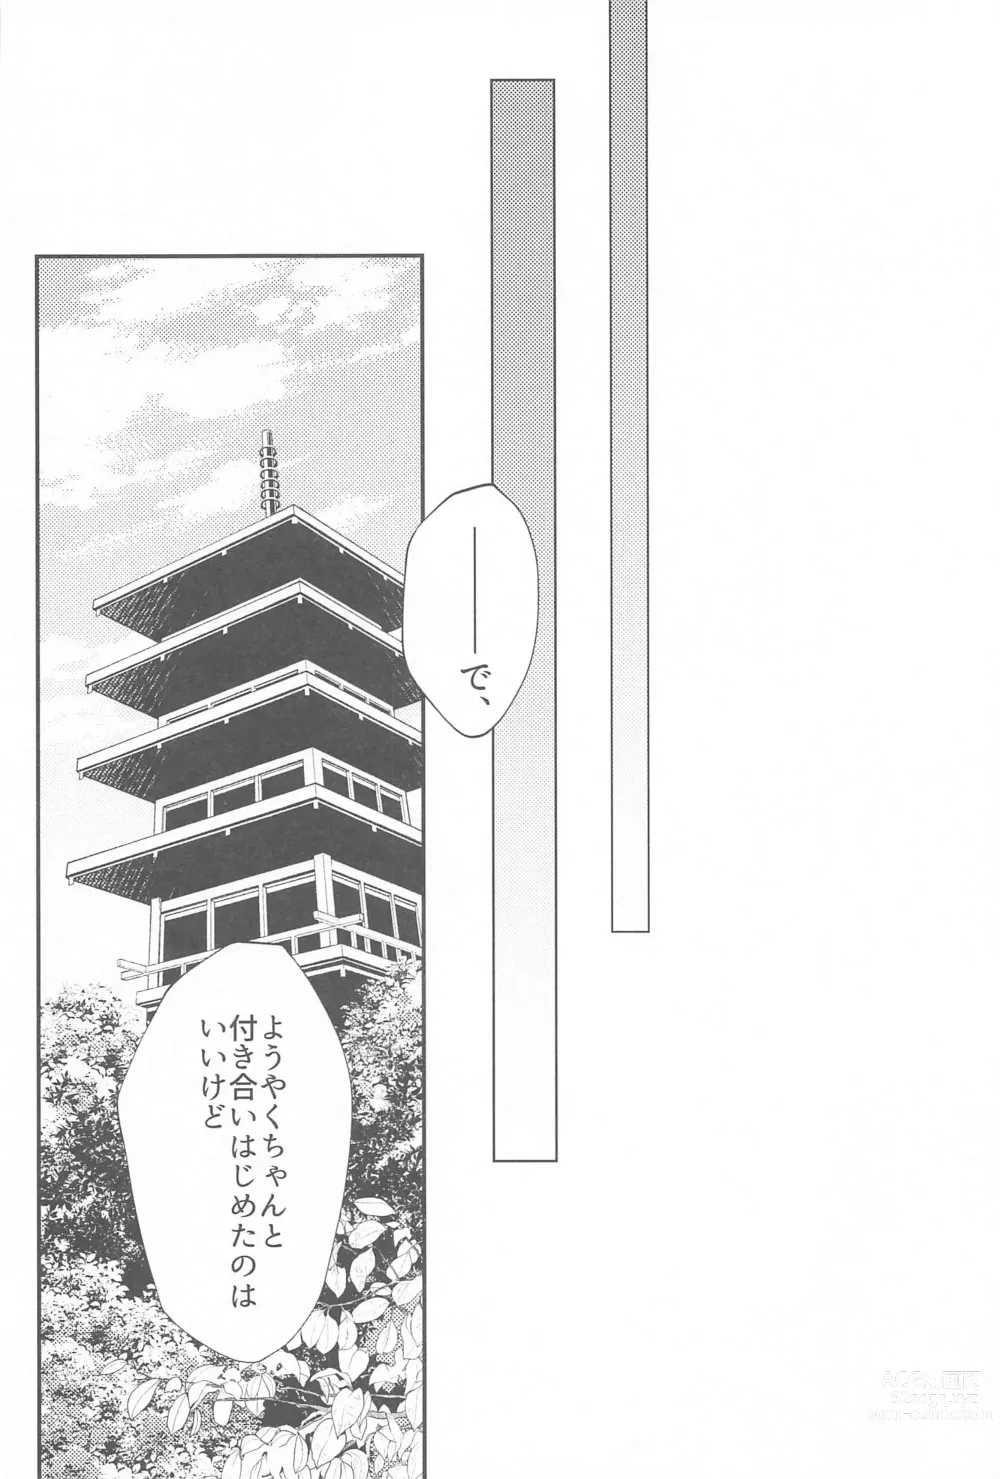 Page 33 of doujinshi Kojirase Blue to Koi Wazurai 2